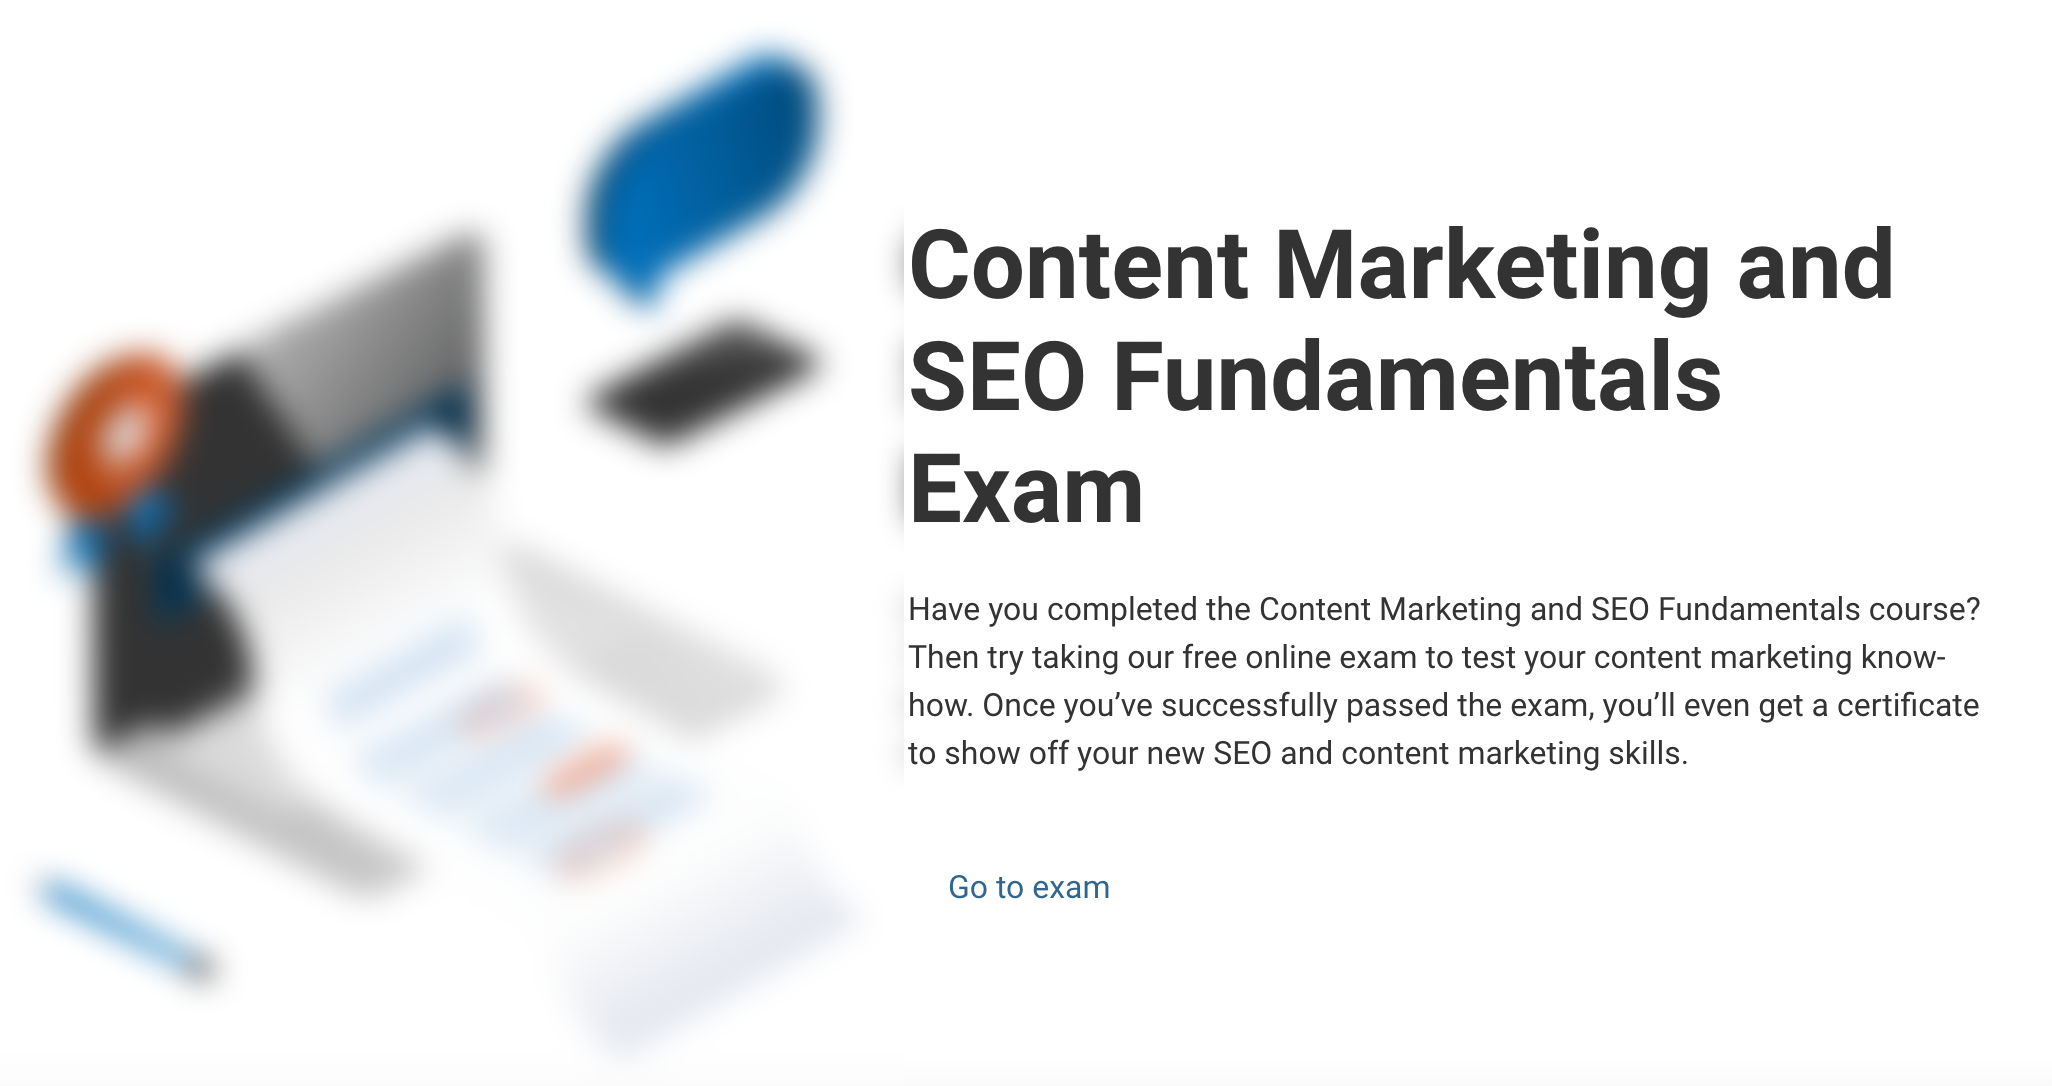 Semrush course in content marketing and SEO fundamentals.